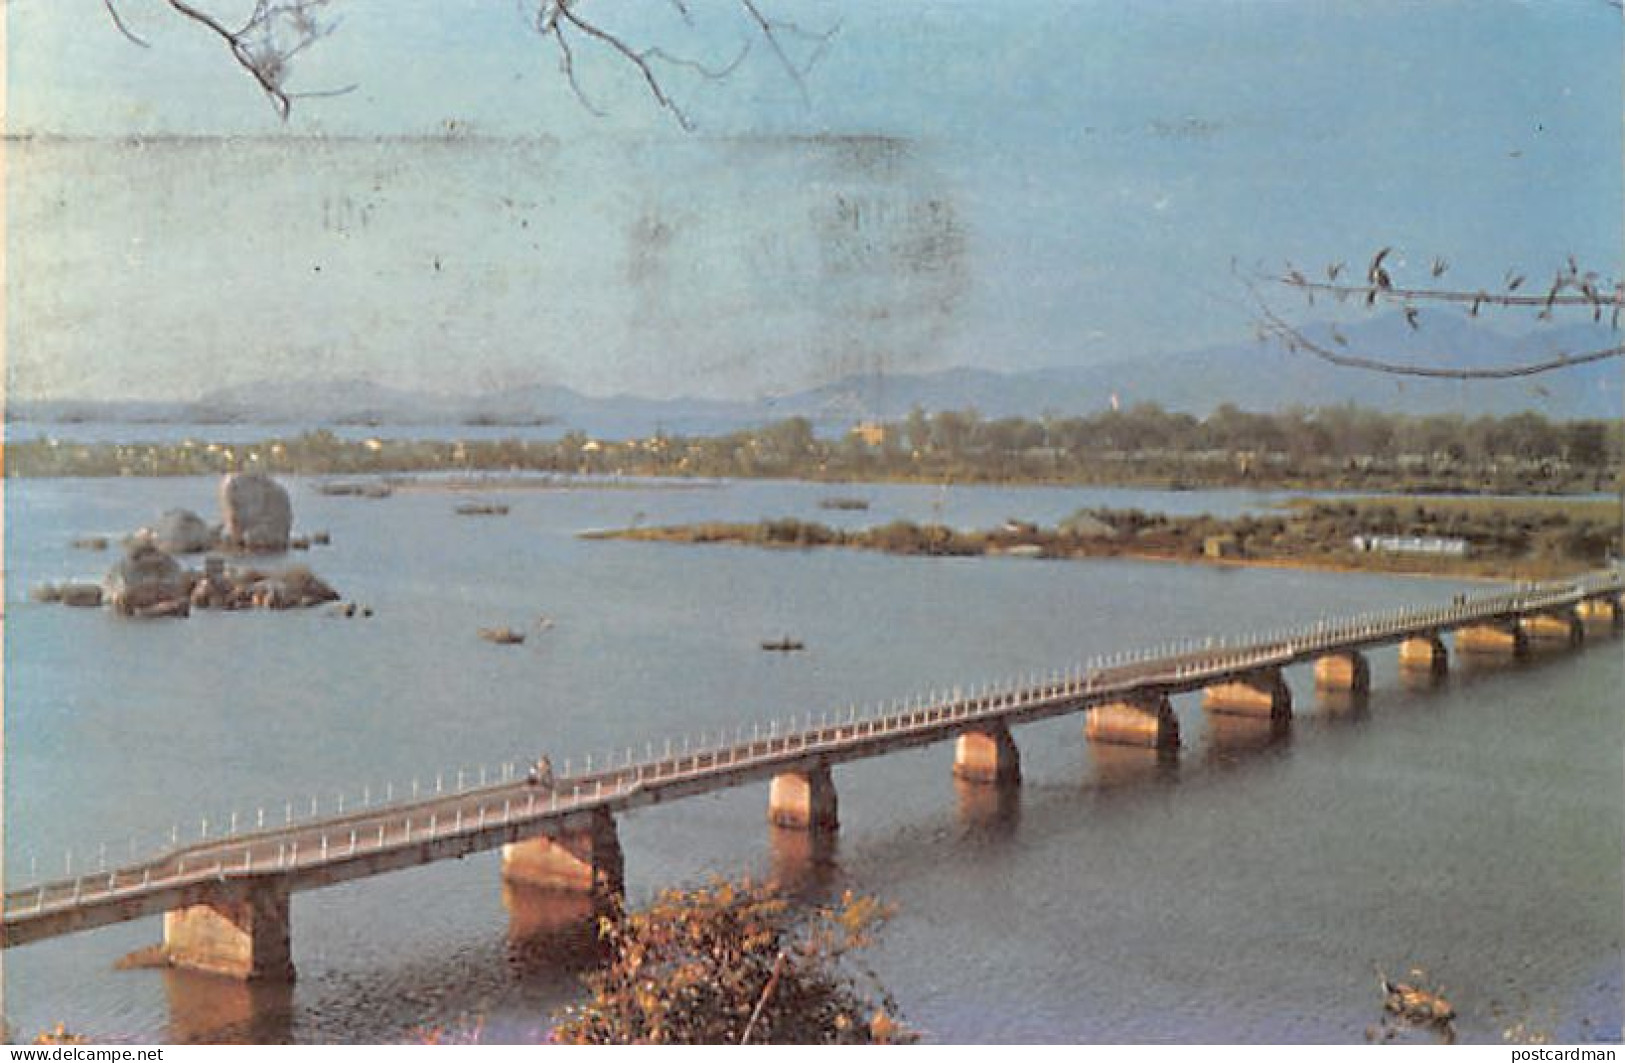 Vietnam - NHA TRANG - Le Pont Géant - Ed. Ly Trieu Hung 61 - Viêt-Nam